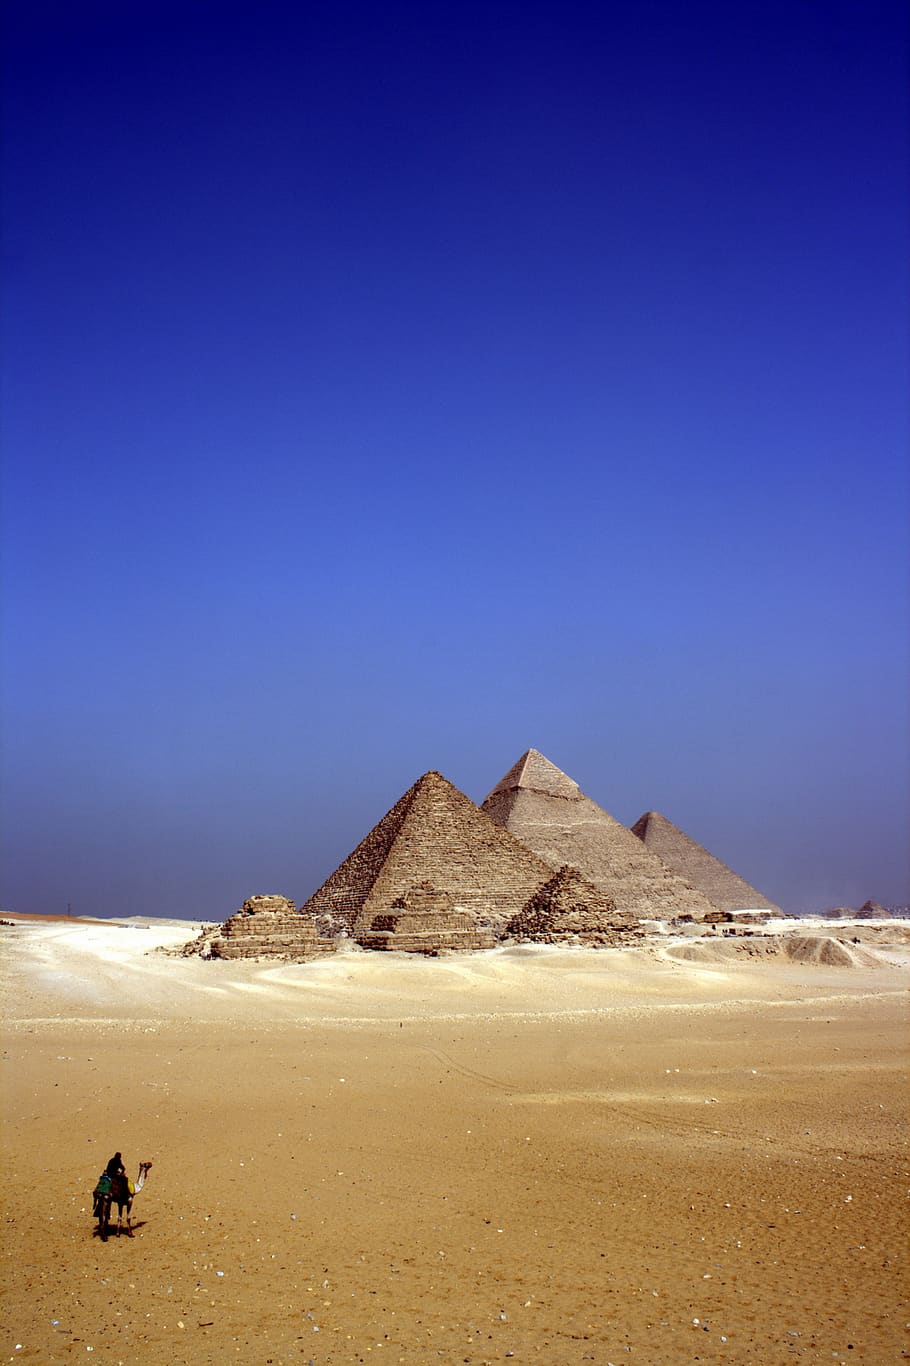 Egipto, desierto, animales, camellos, arena, estructuras, arquitectura, pirámide, cielo, azul